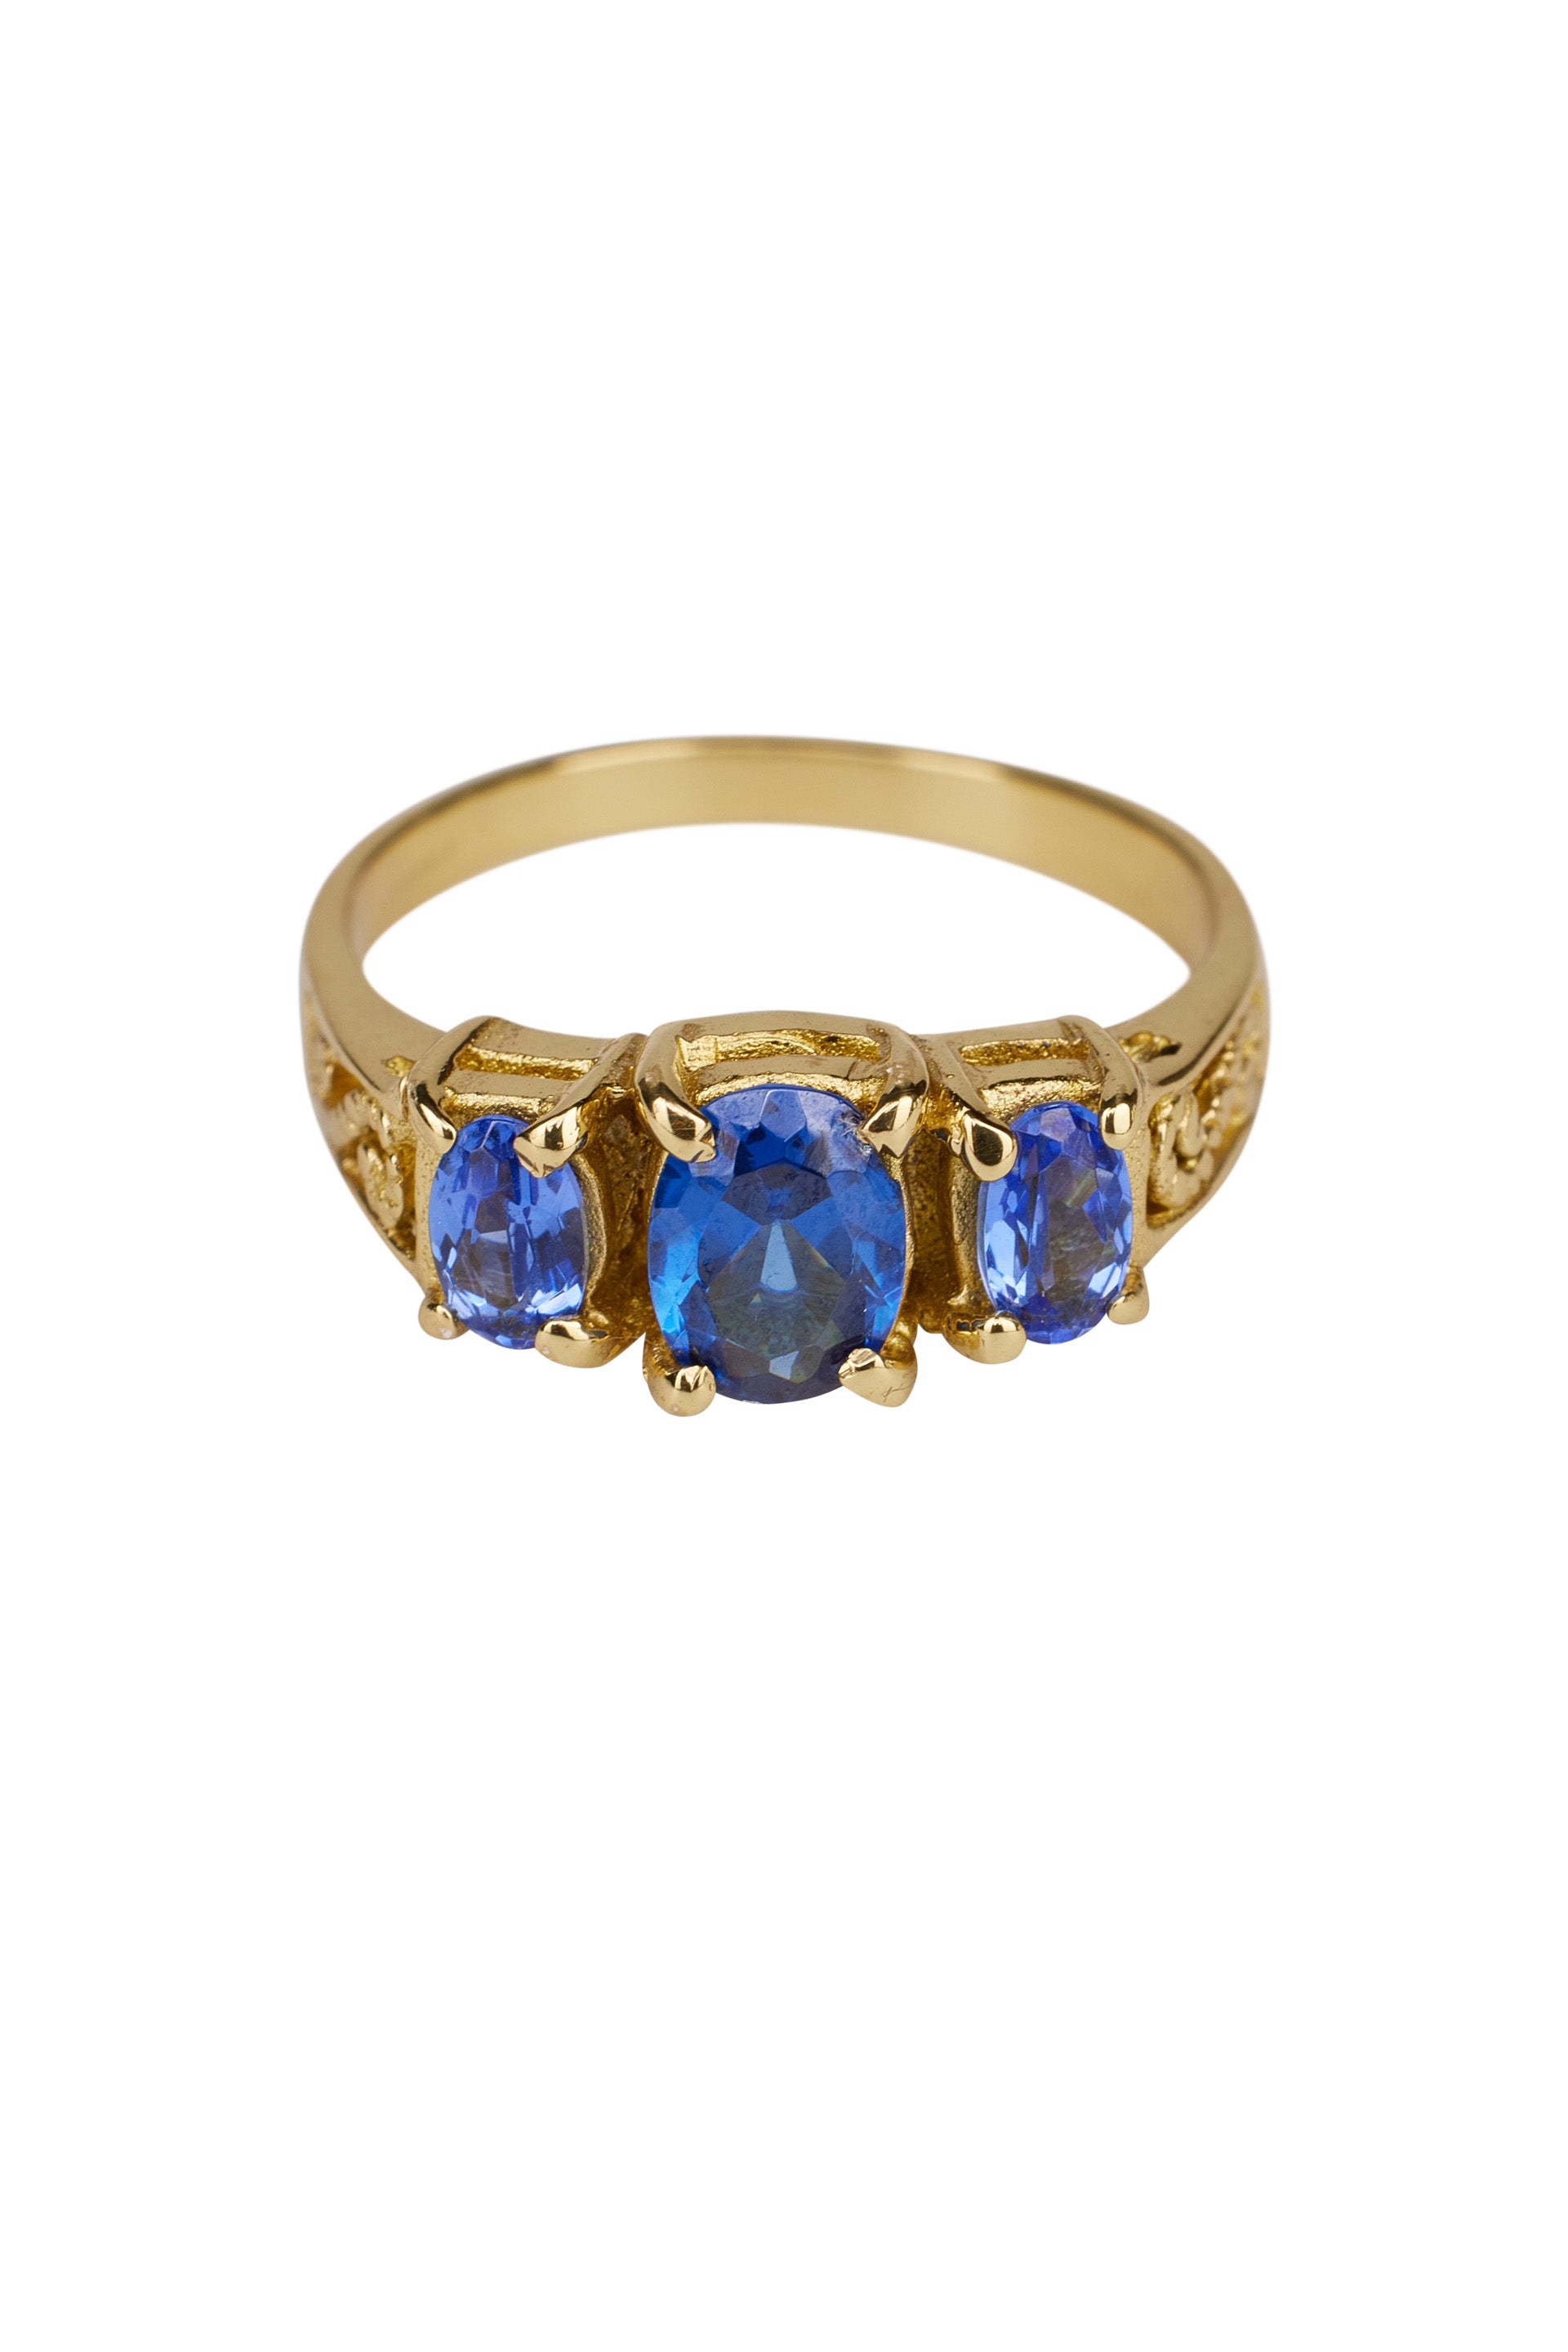 Xzota - Ringen - Vintage blue stone - Brass